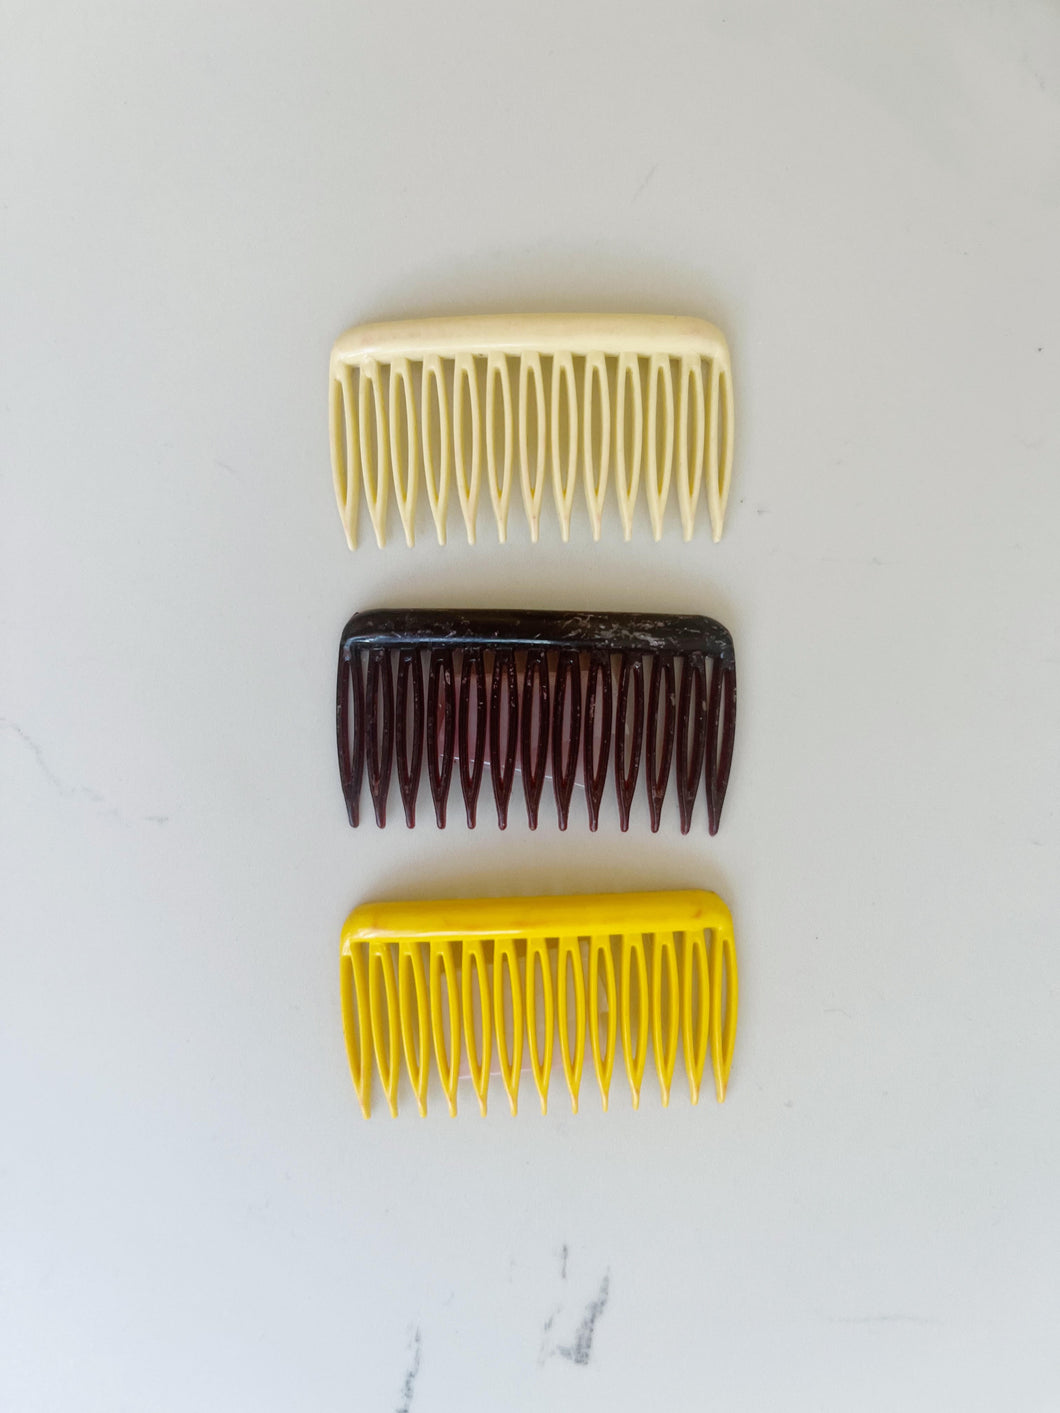 Plastic Hair Combs